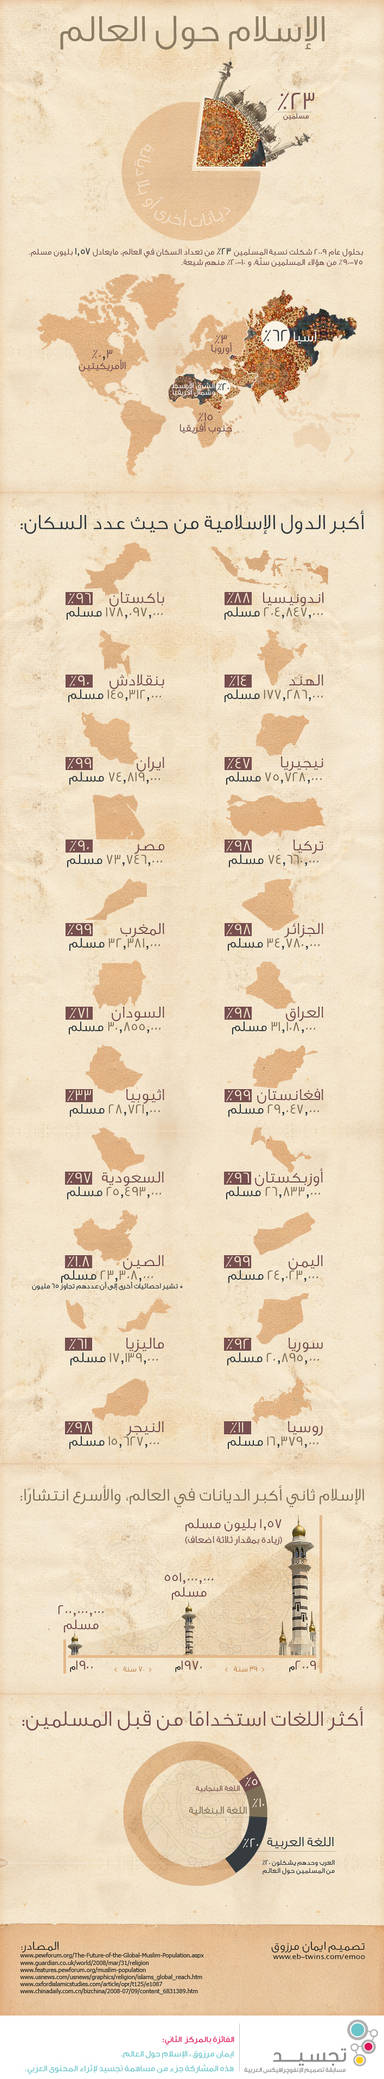 Islam around the world - Infographic (Arabic) by e-emoo on DeviantArt